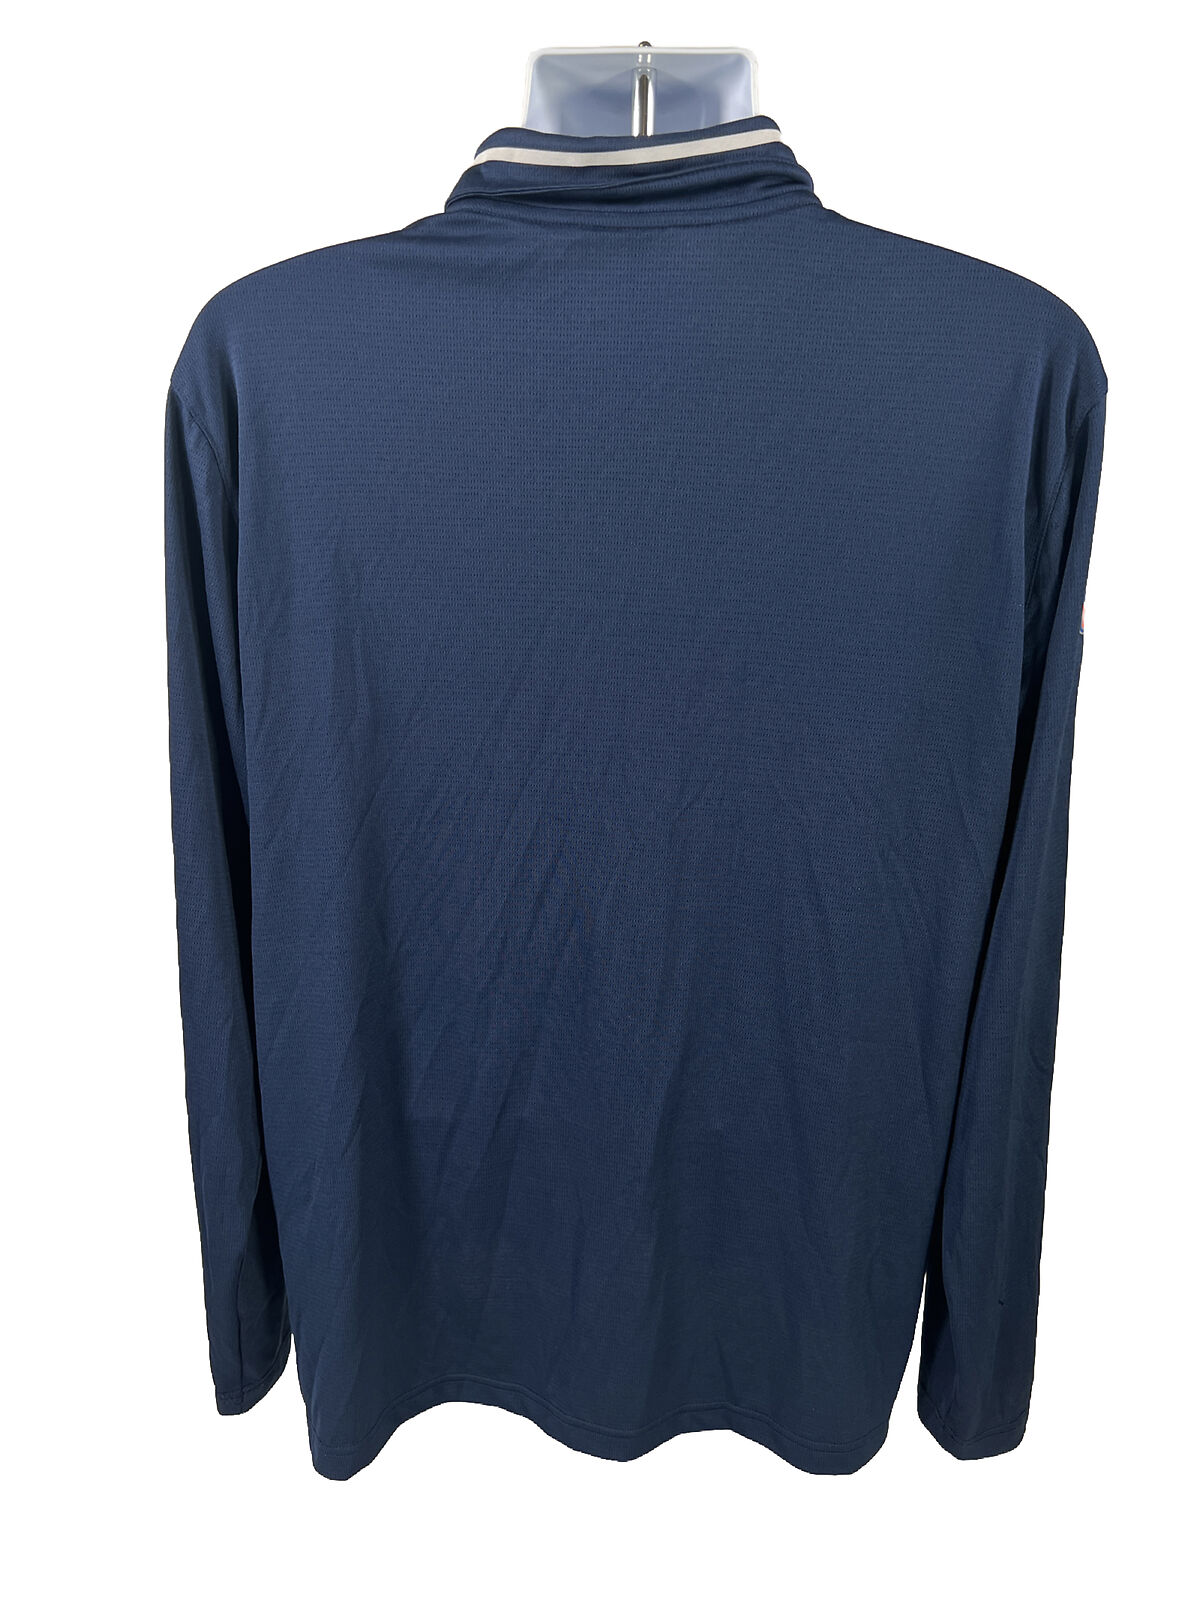 Nike Men's Navy Blue Patriots Football Long Sleeve Polo Shirt - L